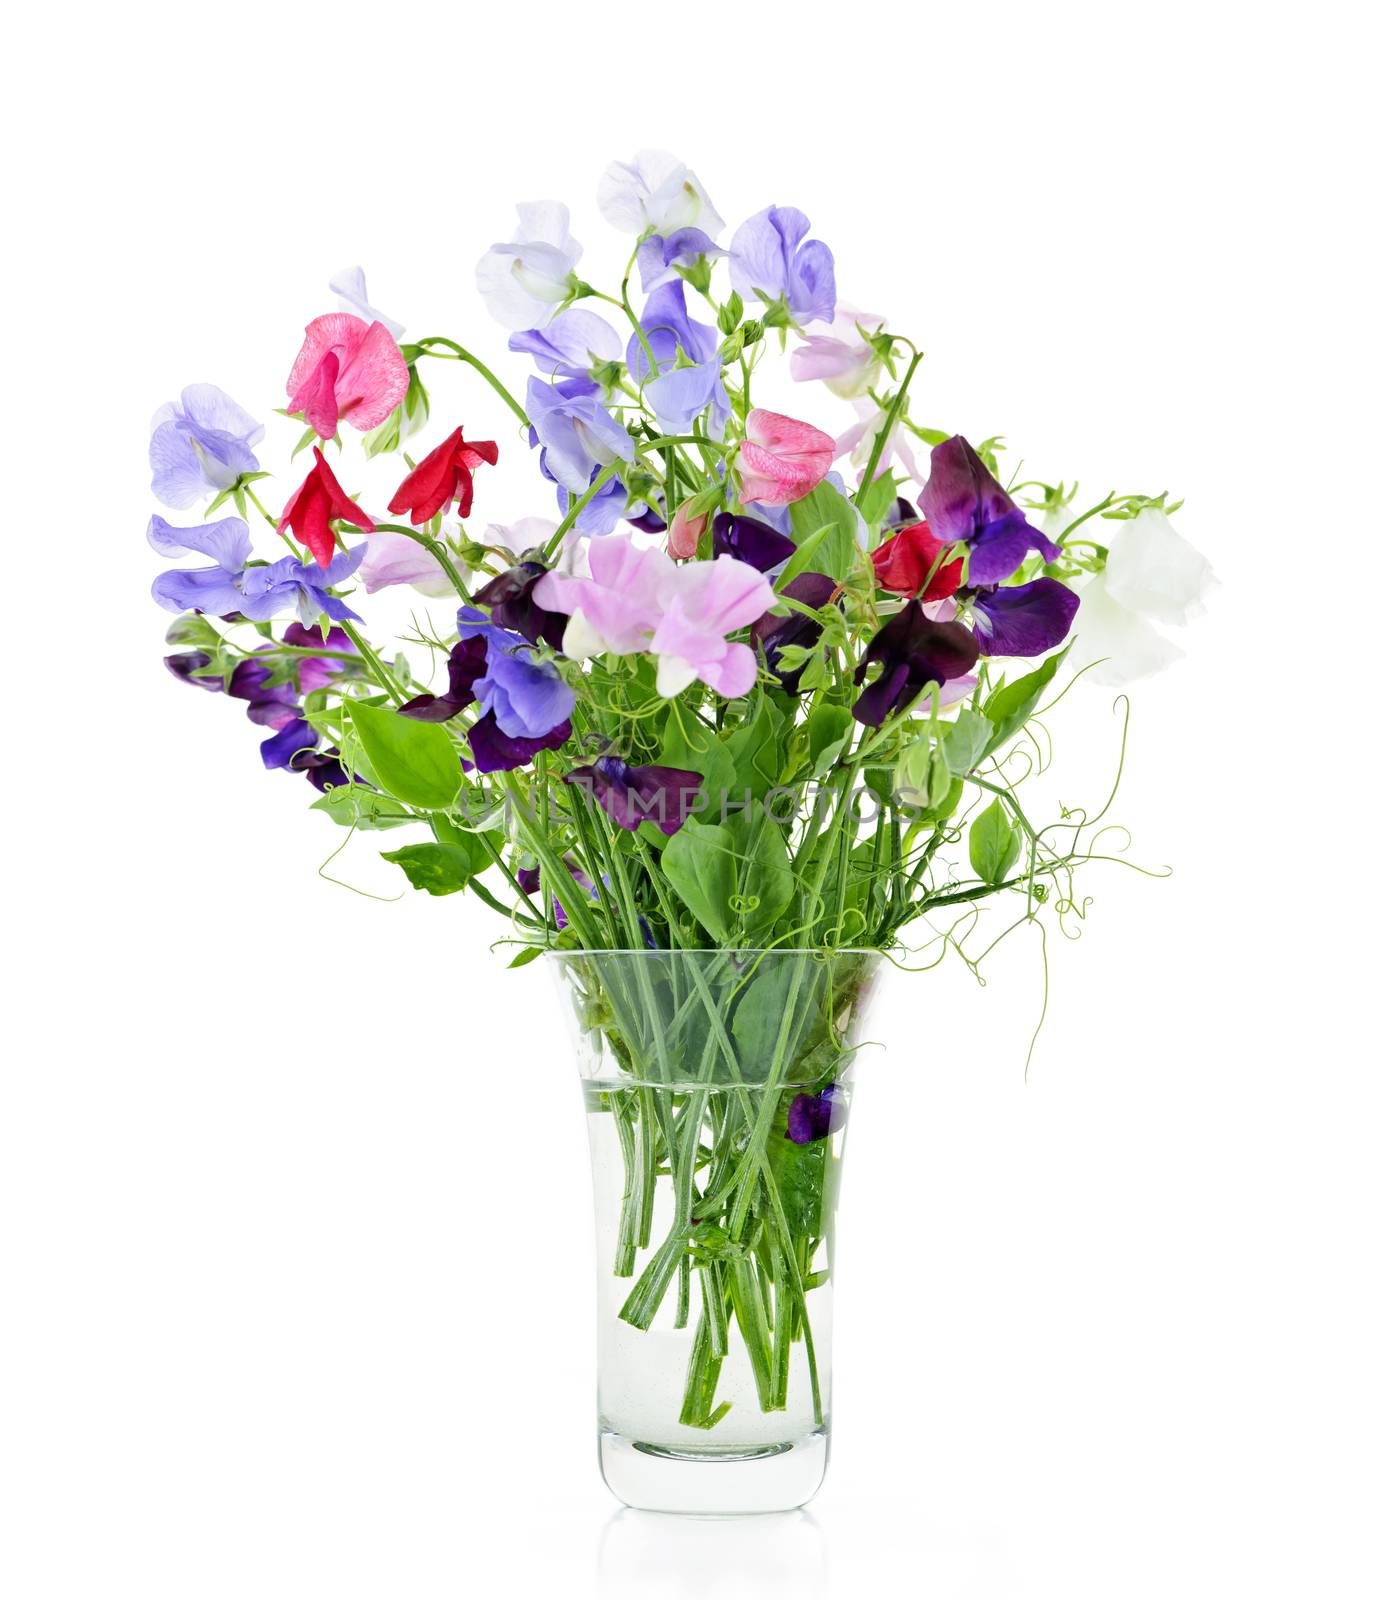 Bouquet of sweet pea flowers in vase by elenathewise